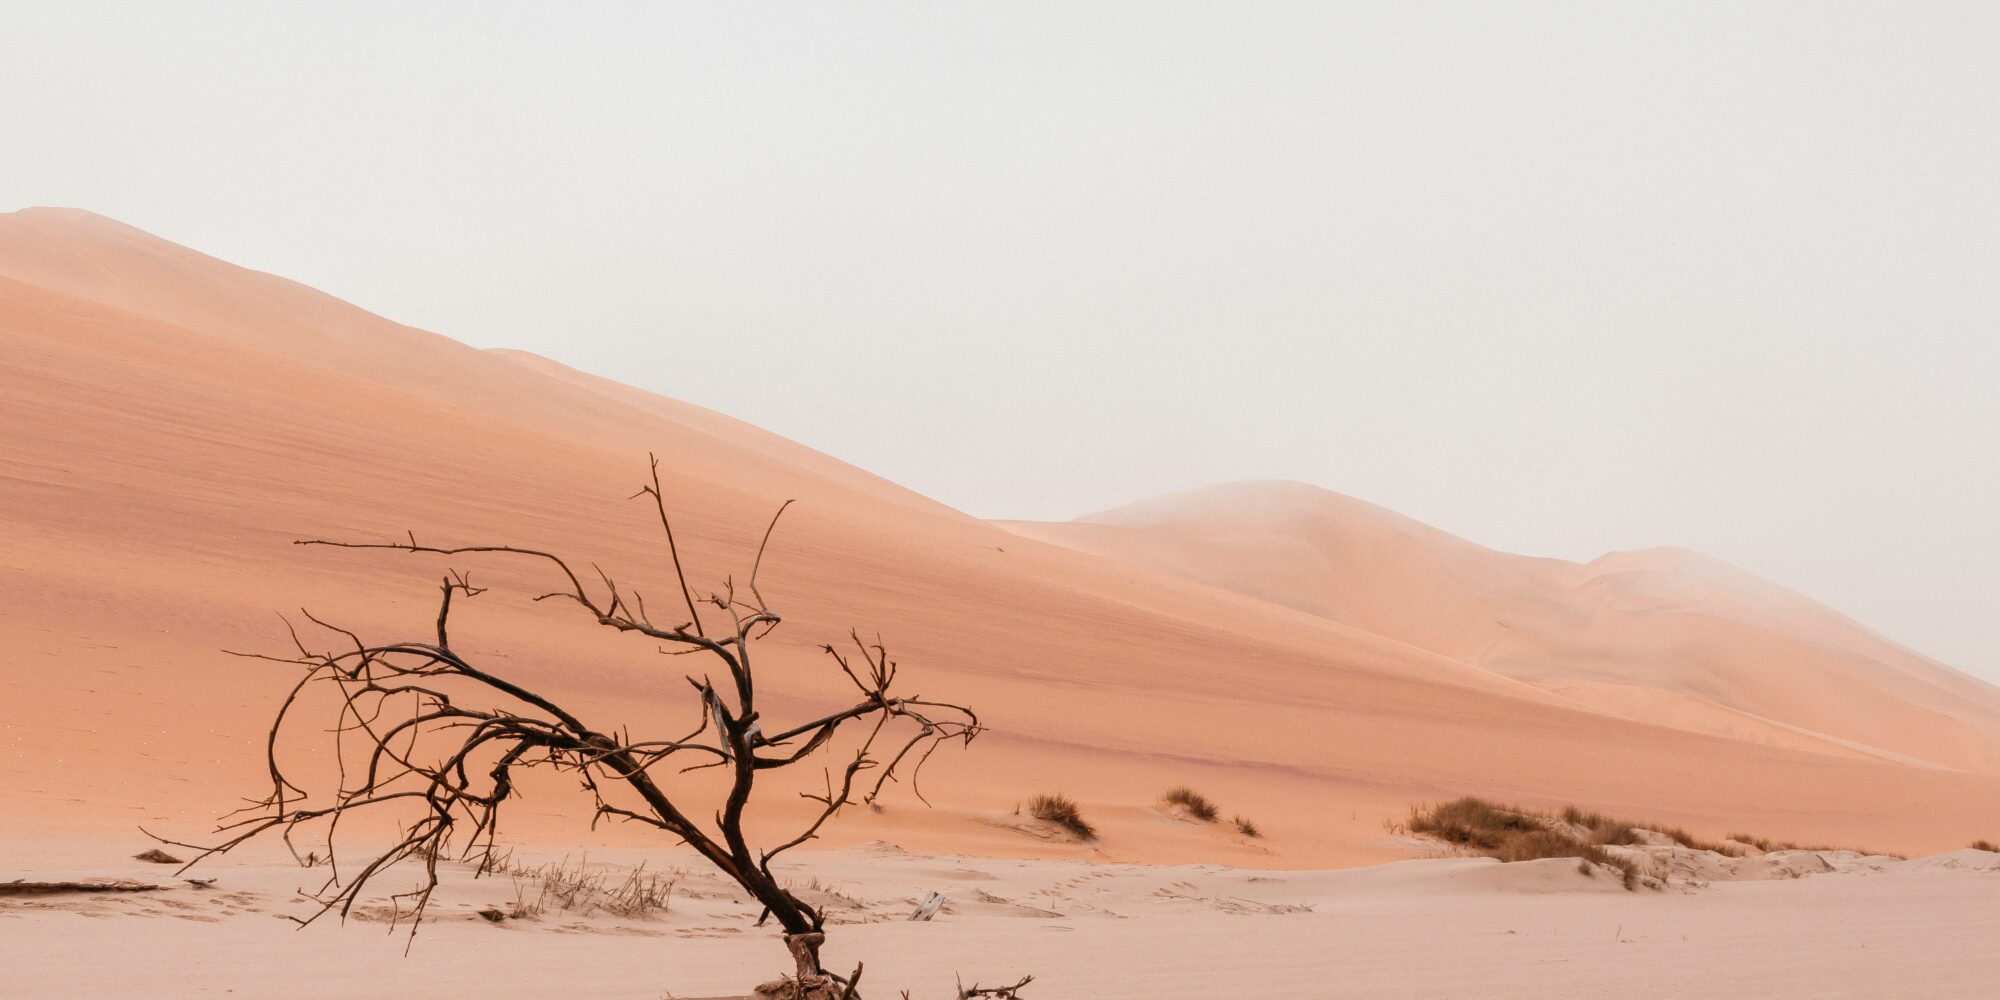 A barren tree right leaning in a sandy desert.